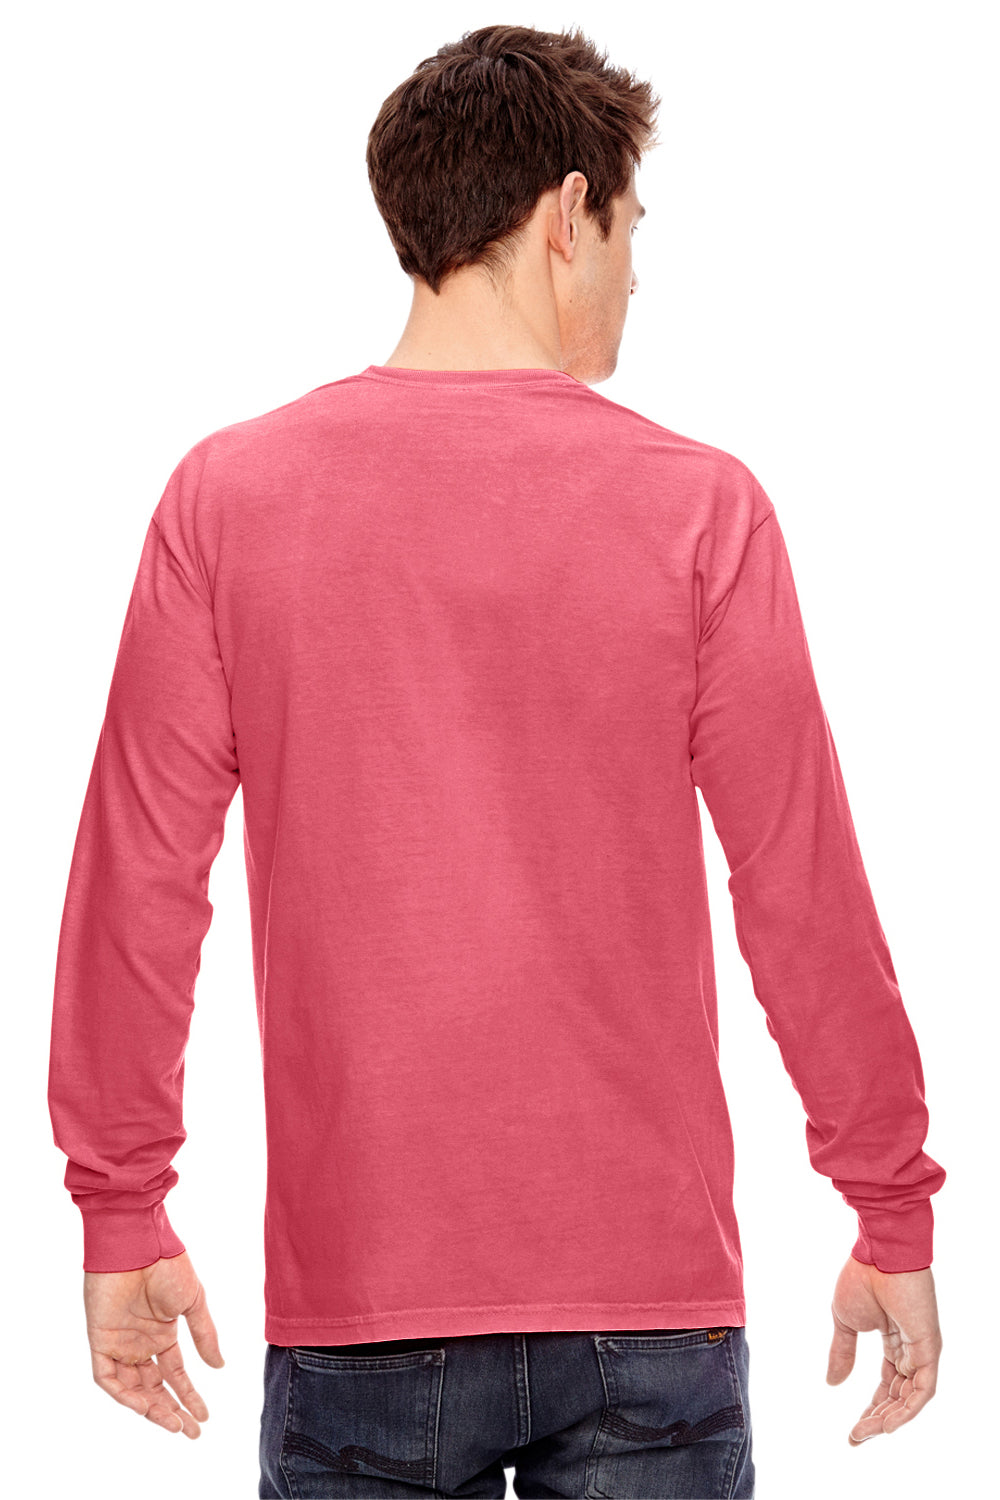 Comfort Colors C6014 Mens Long Sleeve Crewneck T-Shirt Watermelon Pink Back